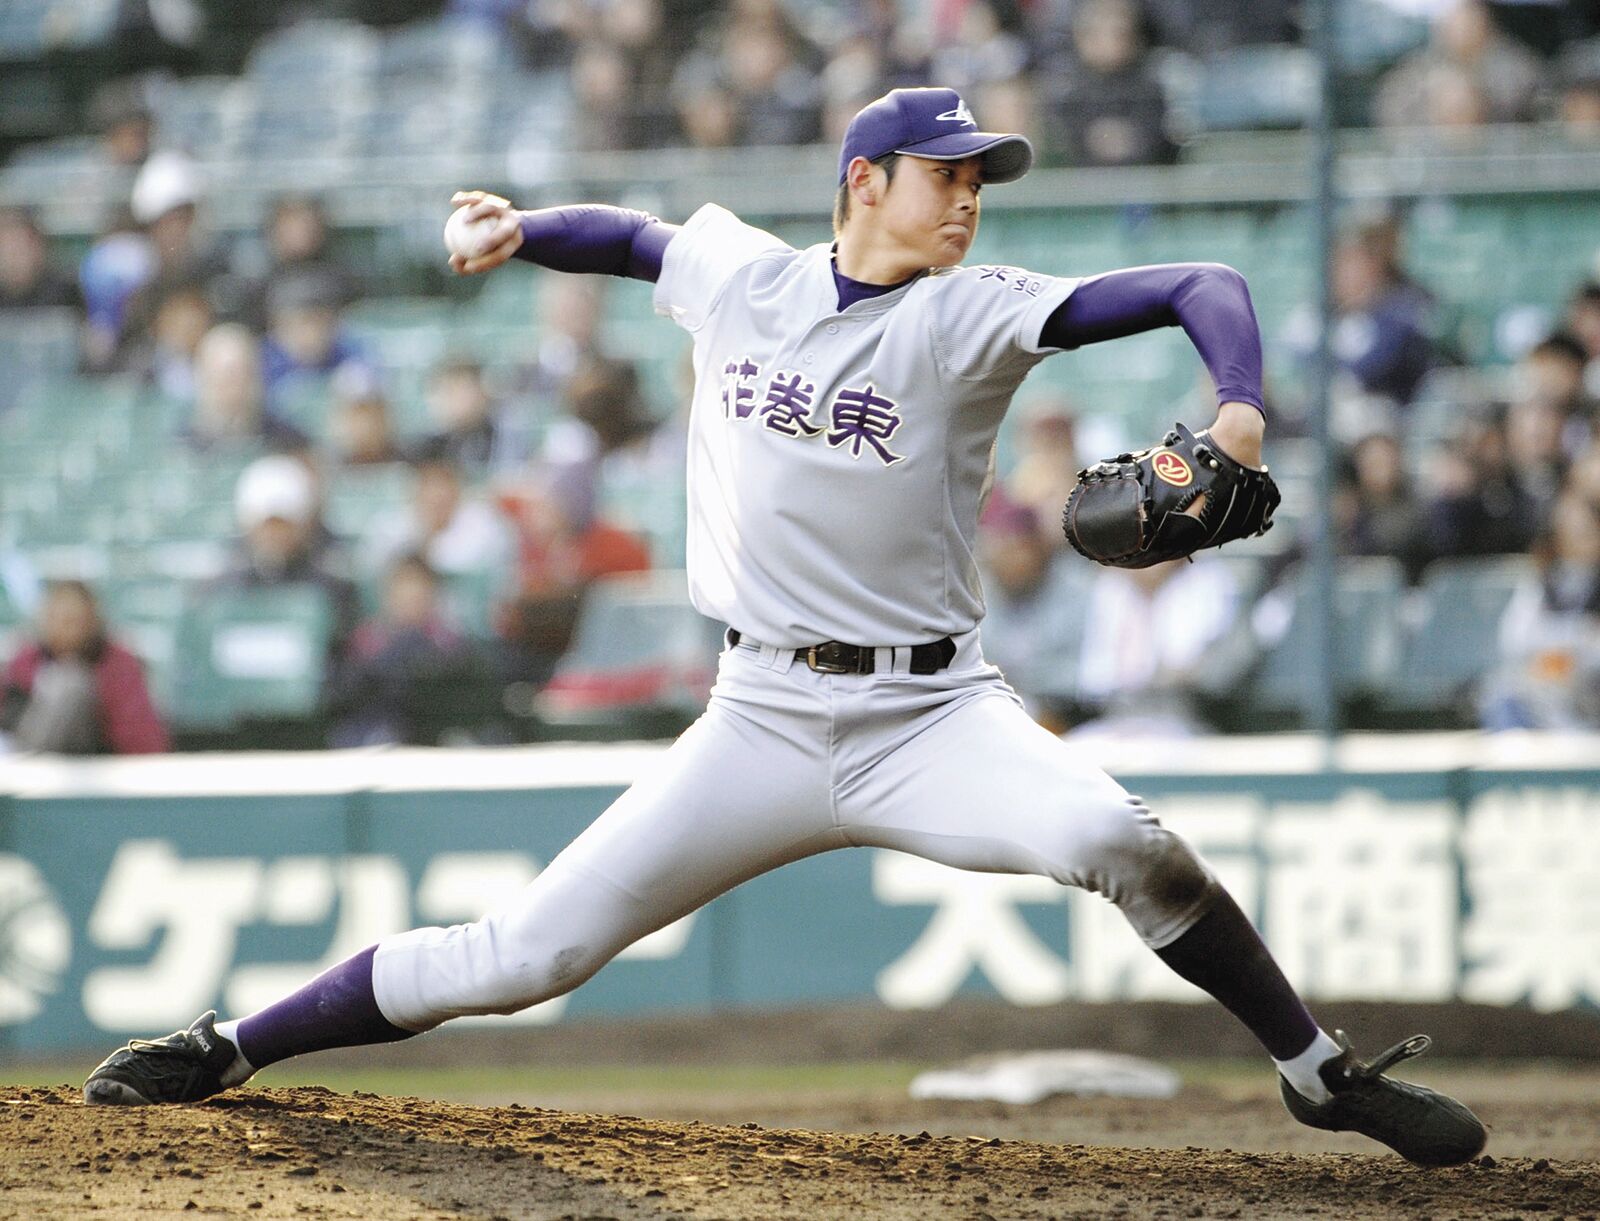 Ohatani has adapted to MLB Sports avpress